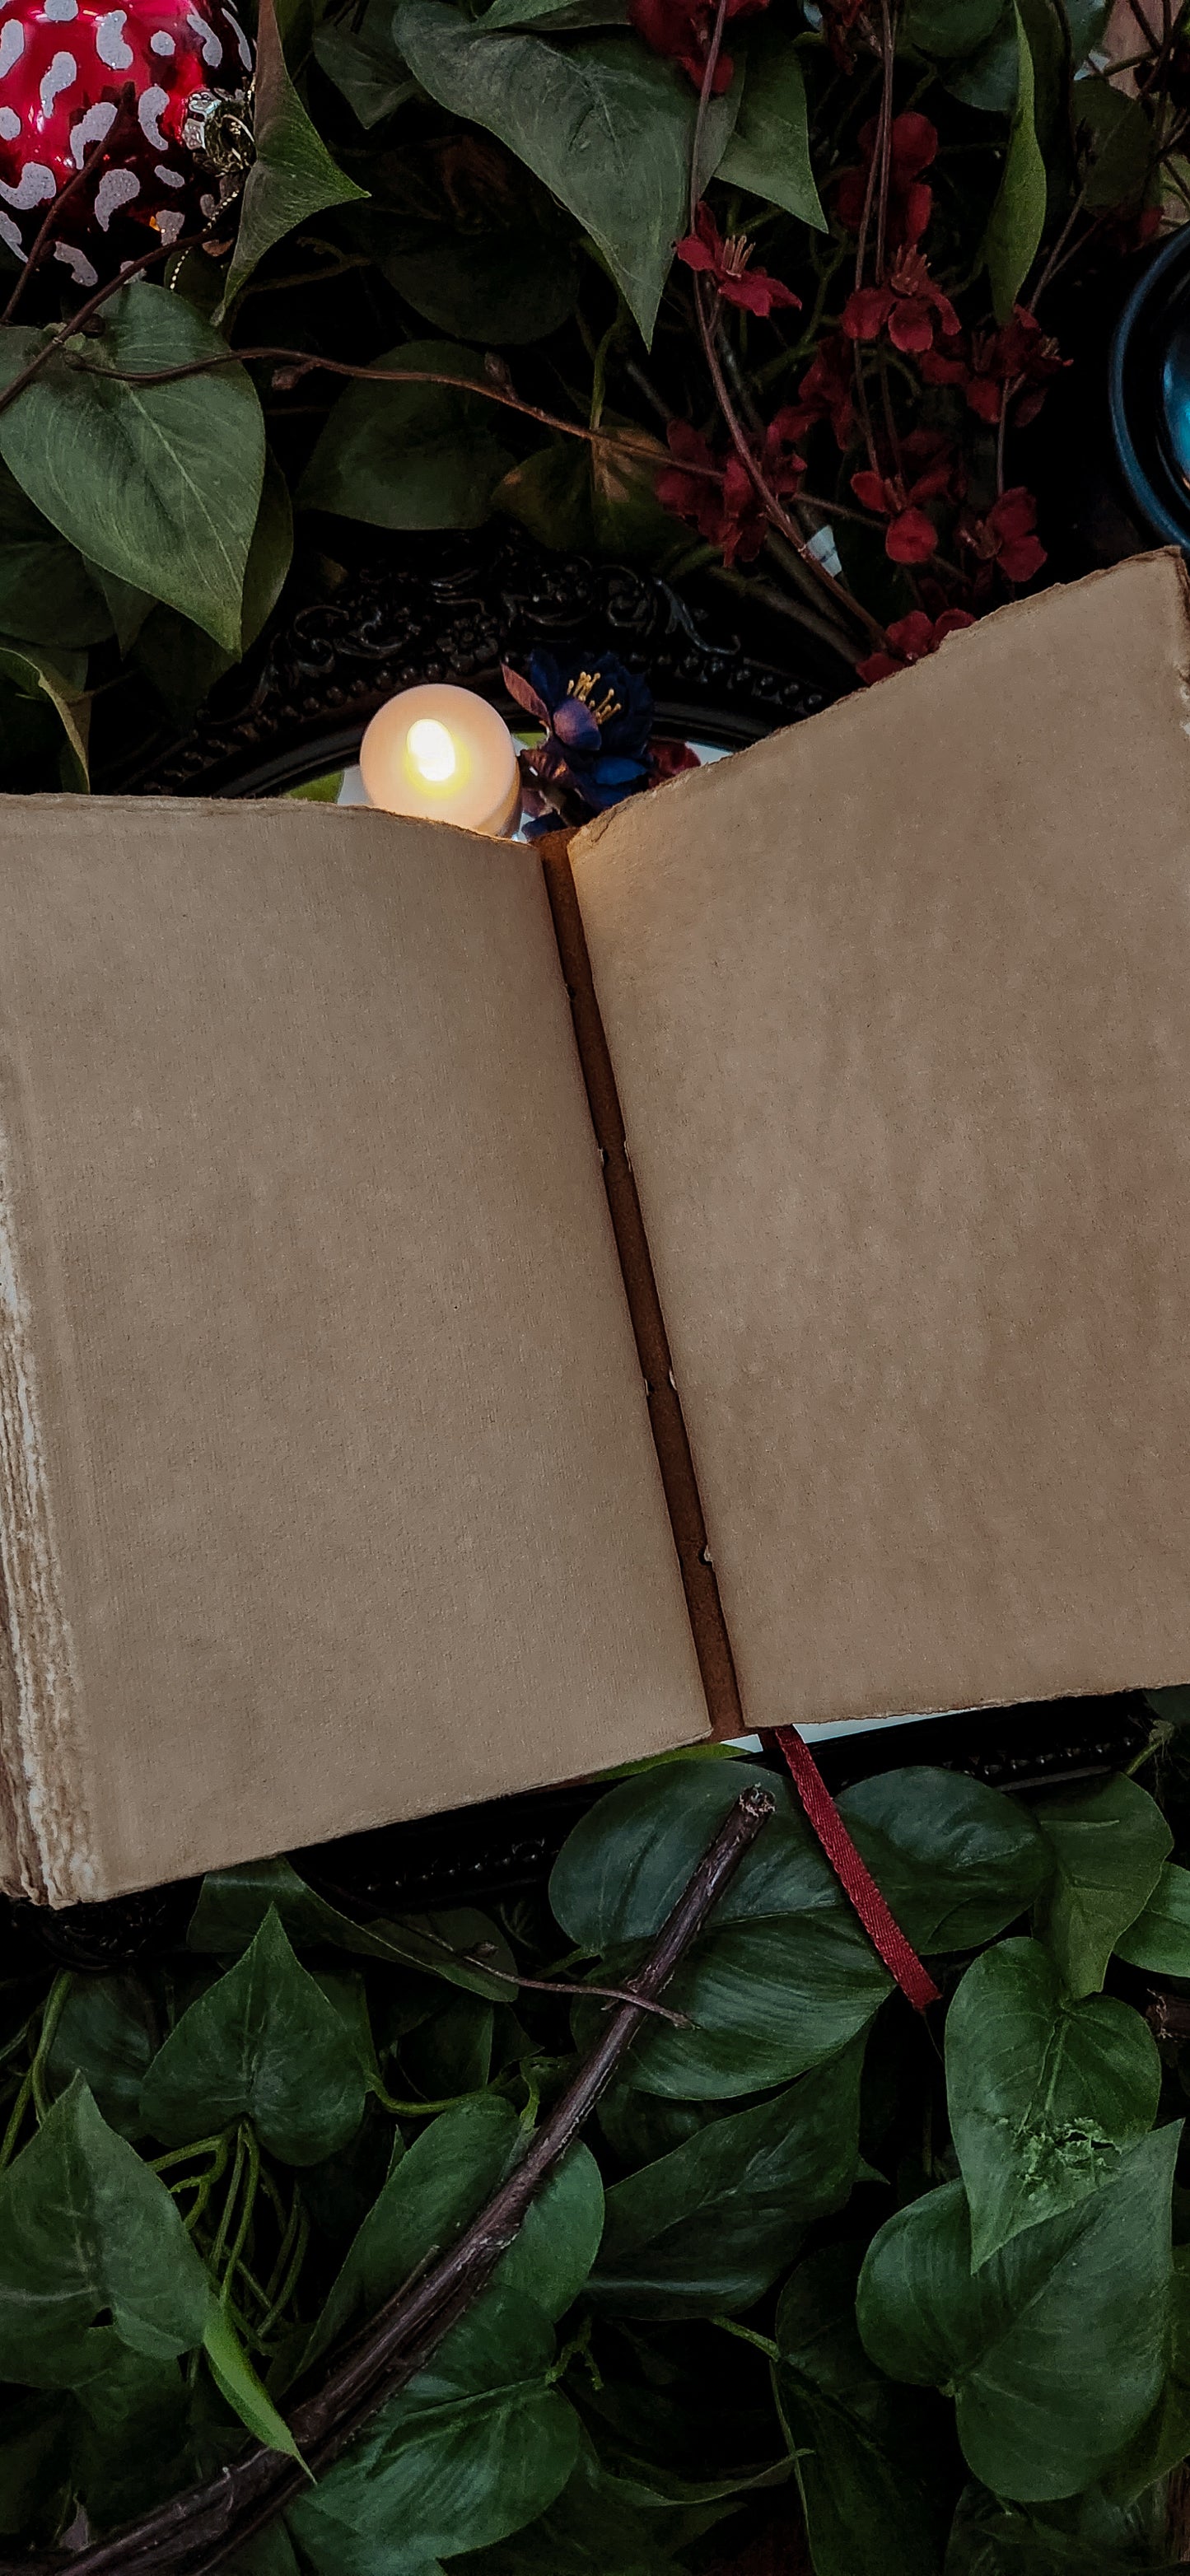 Potion Book leather journal & sketchbook